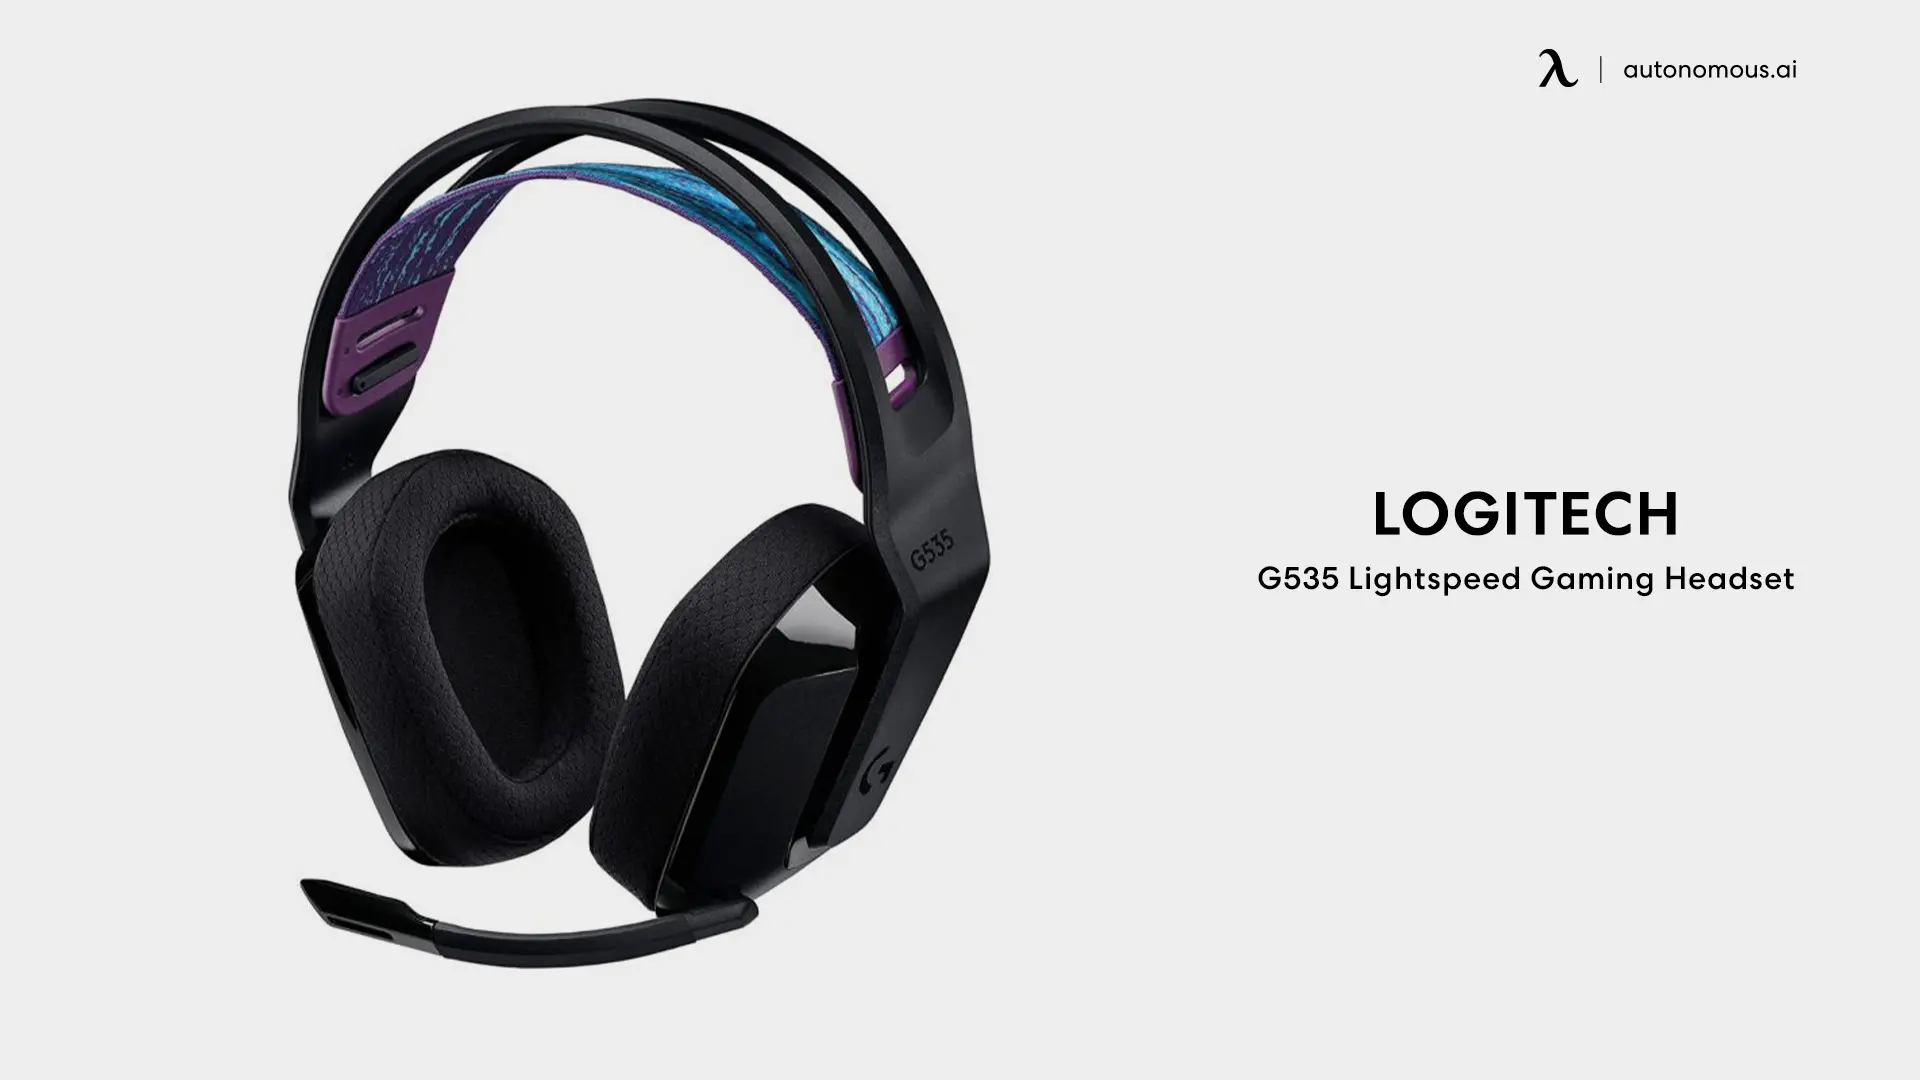 G535 Lightspeed Wireless Gaming Headset by Logitech